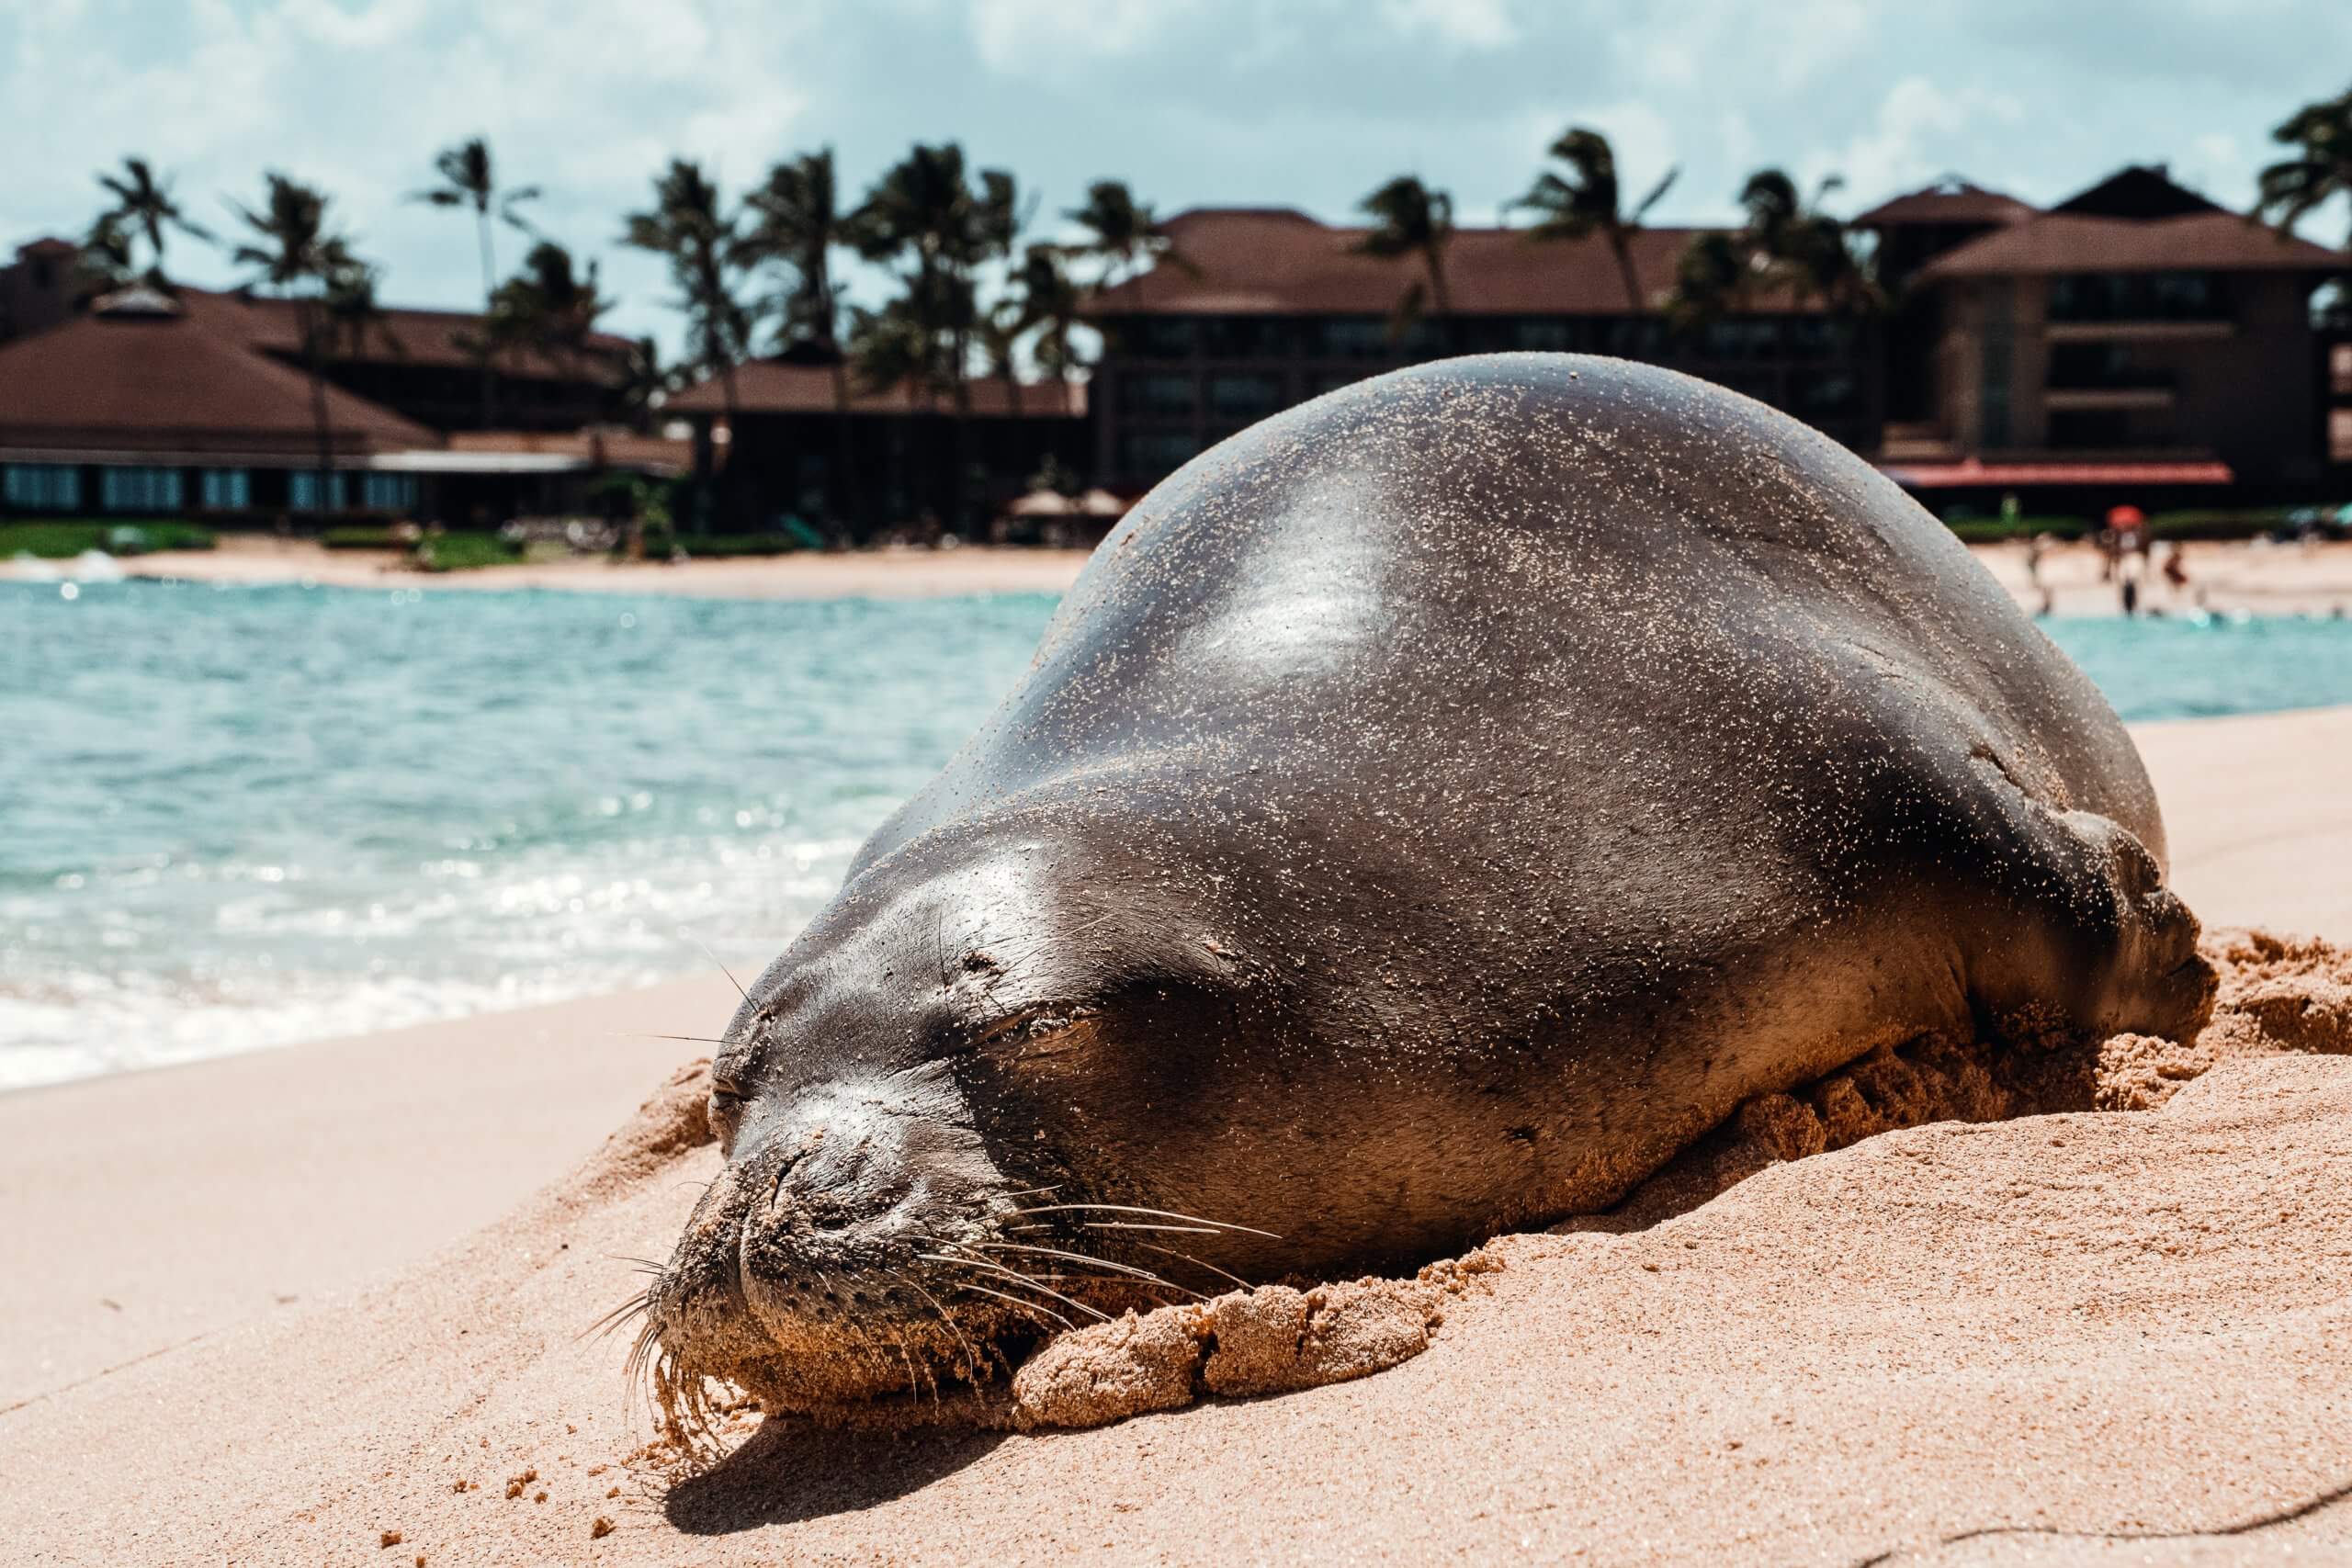 hawaiian monk seal conservation efforts